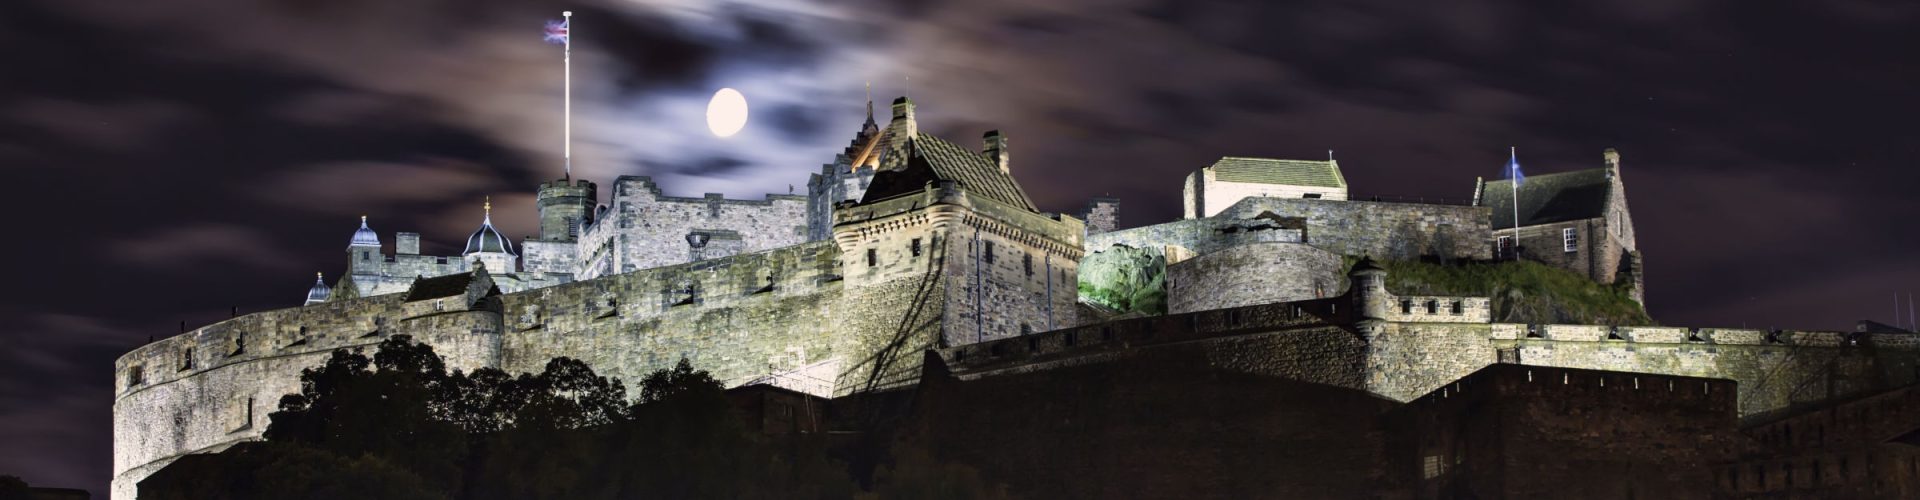 Edinburgh Castle at night, with a full moon